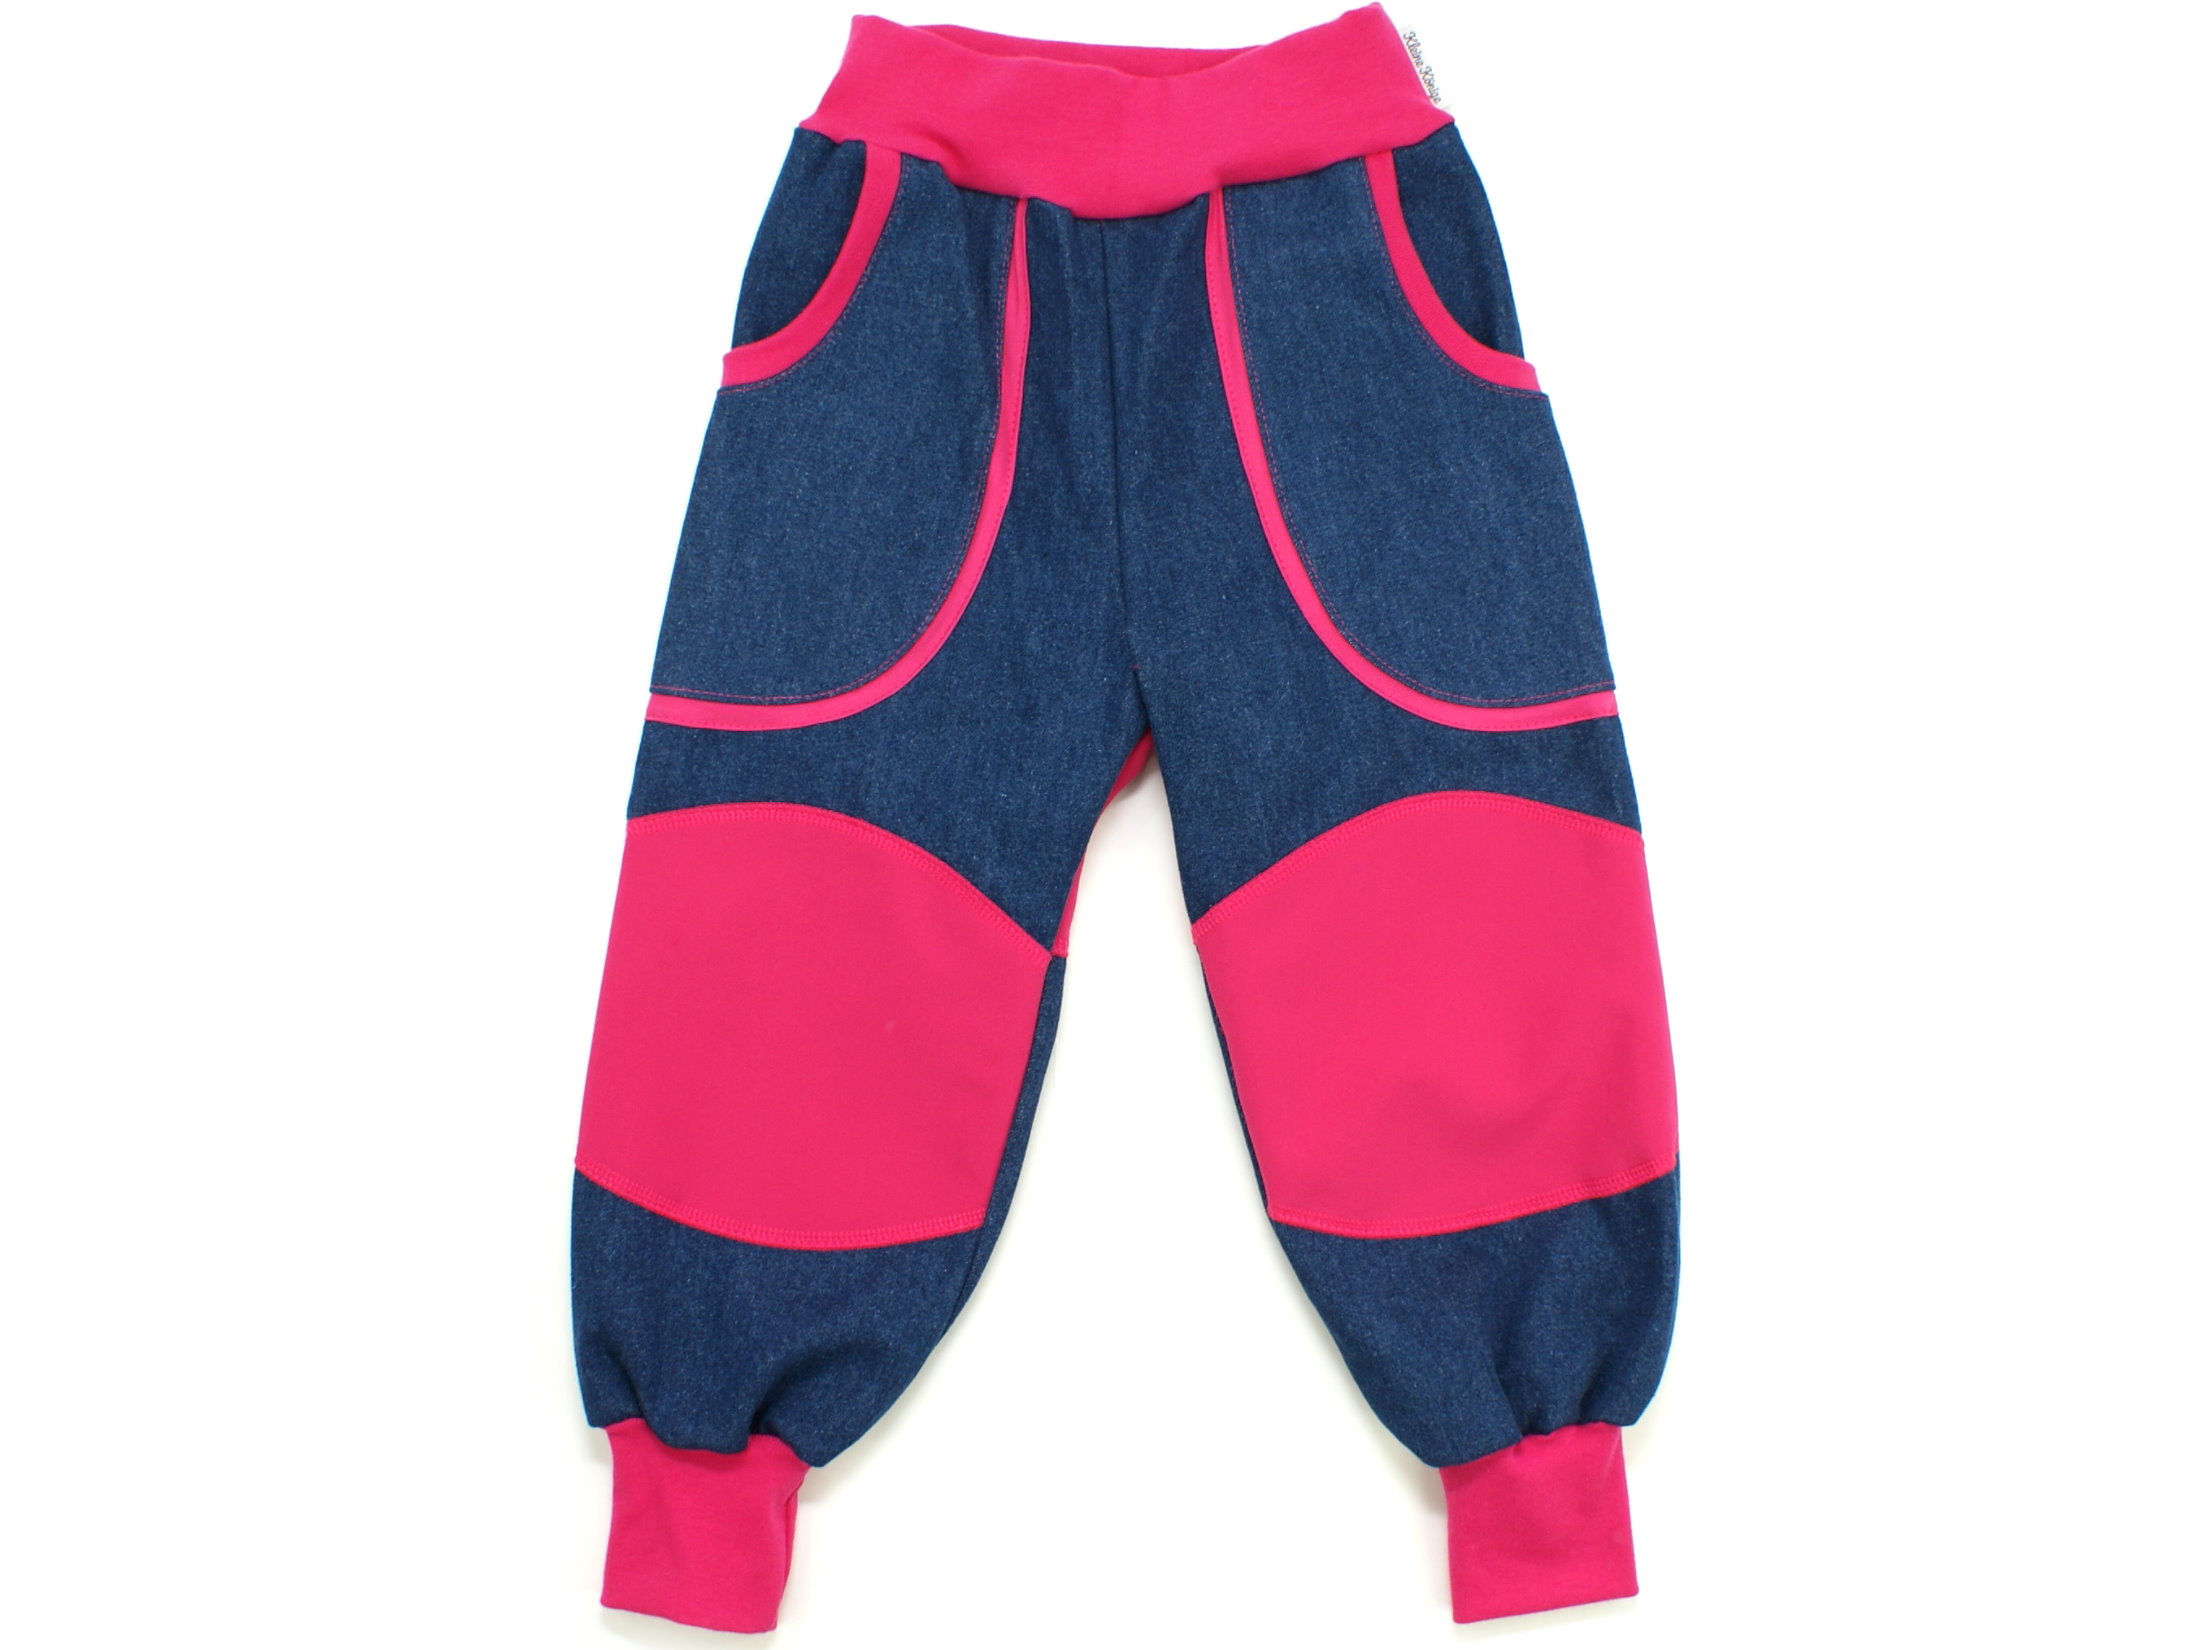 Kinder Outdoorhose Jeans Räuberhose  "Uni" pink